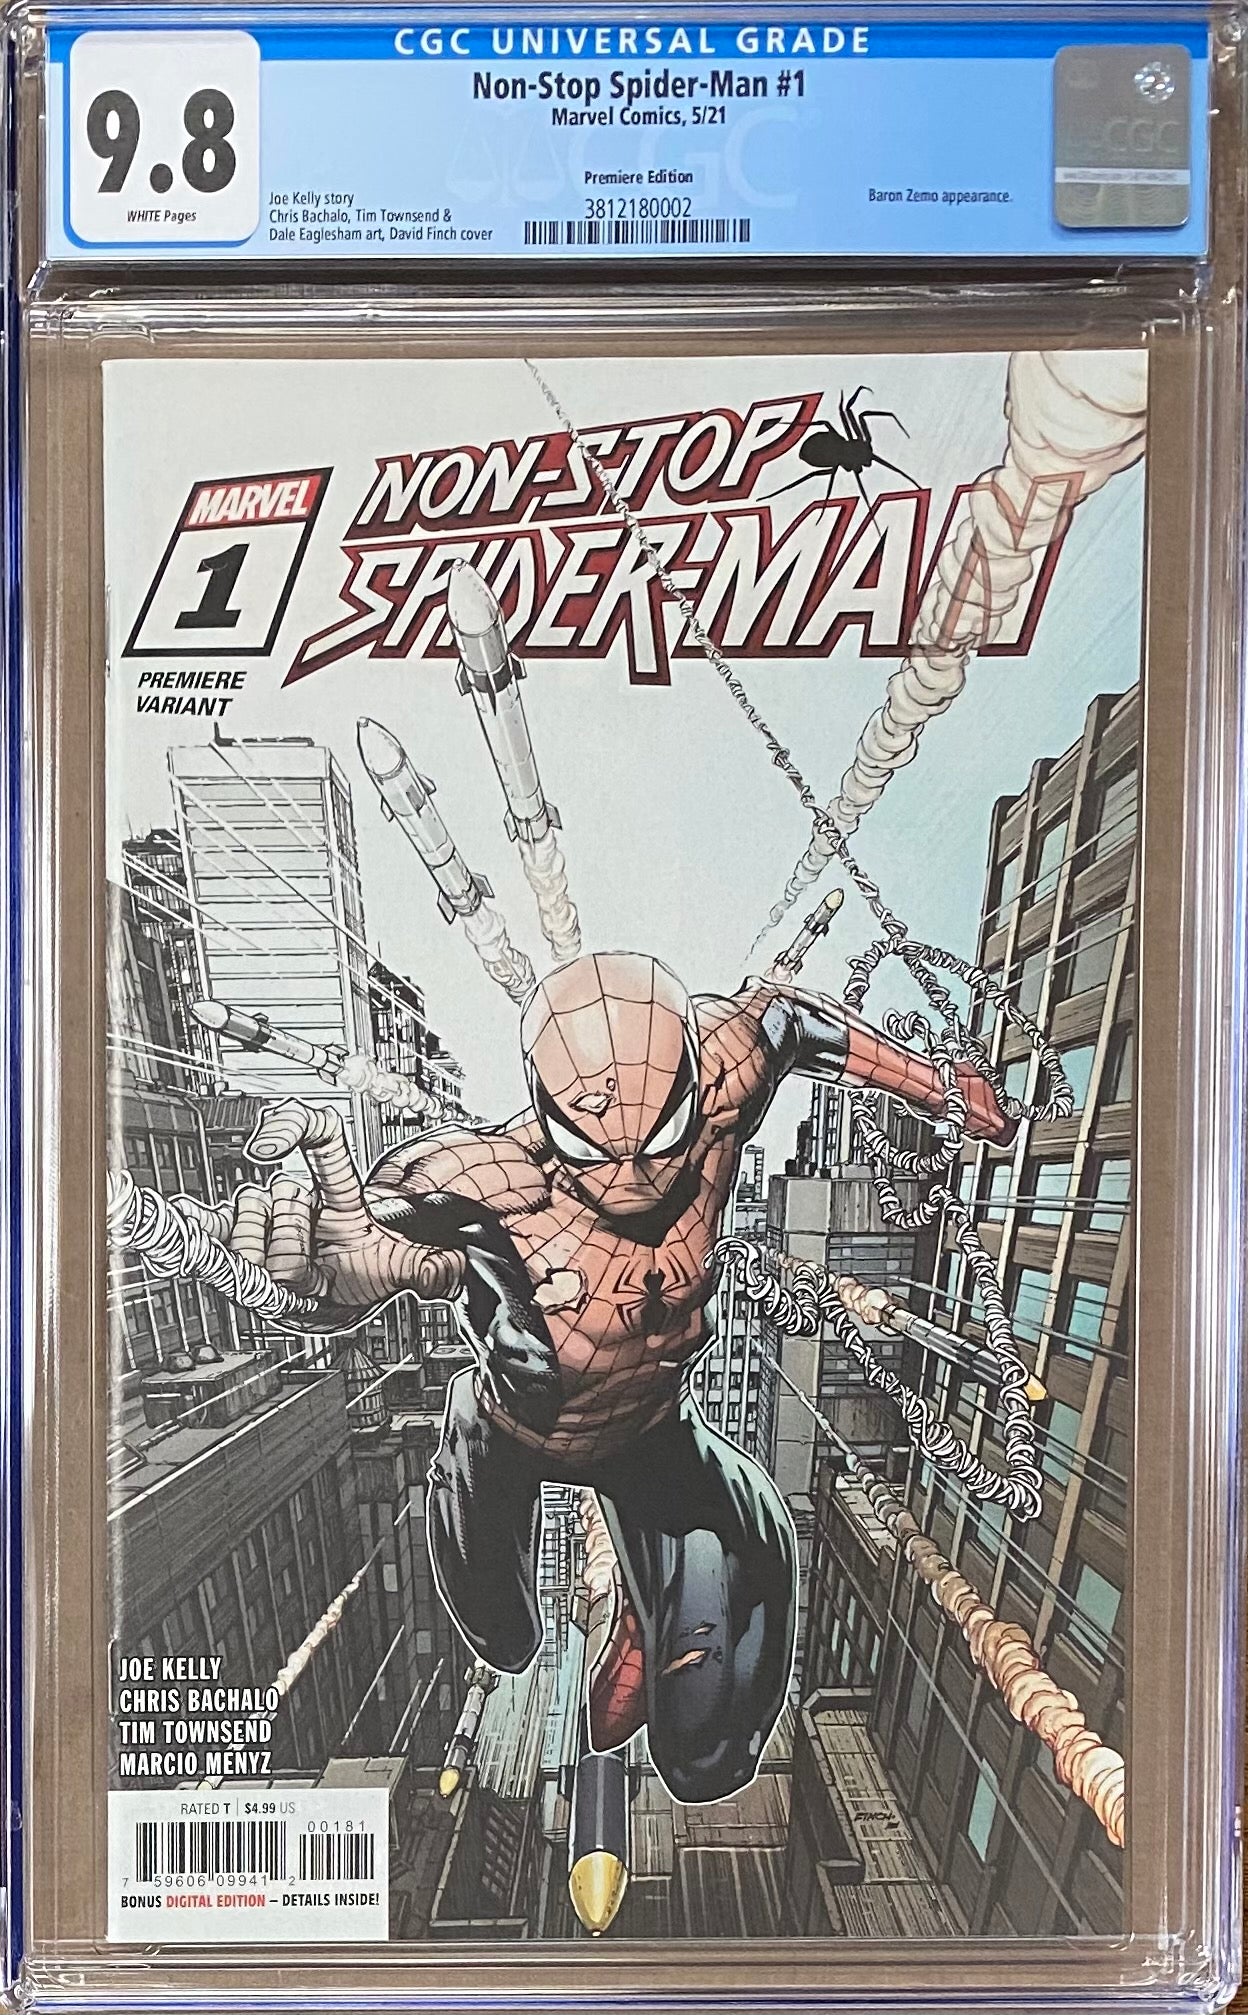 Non-Stop Spider-Man #1 Premiere Edition Variant CGC 9.8